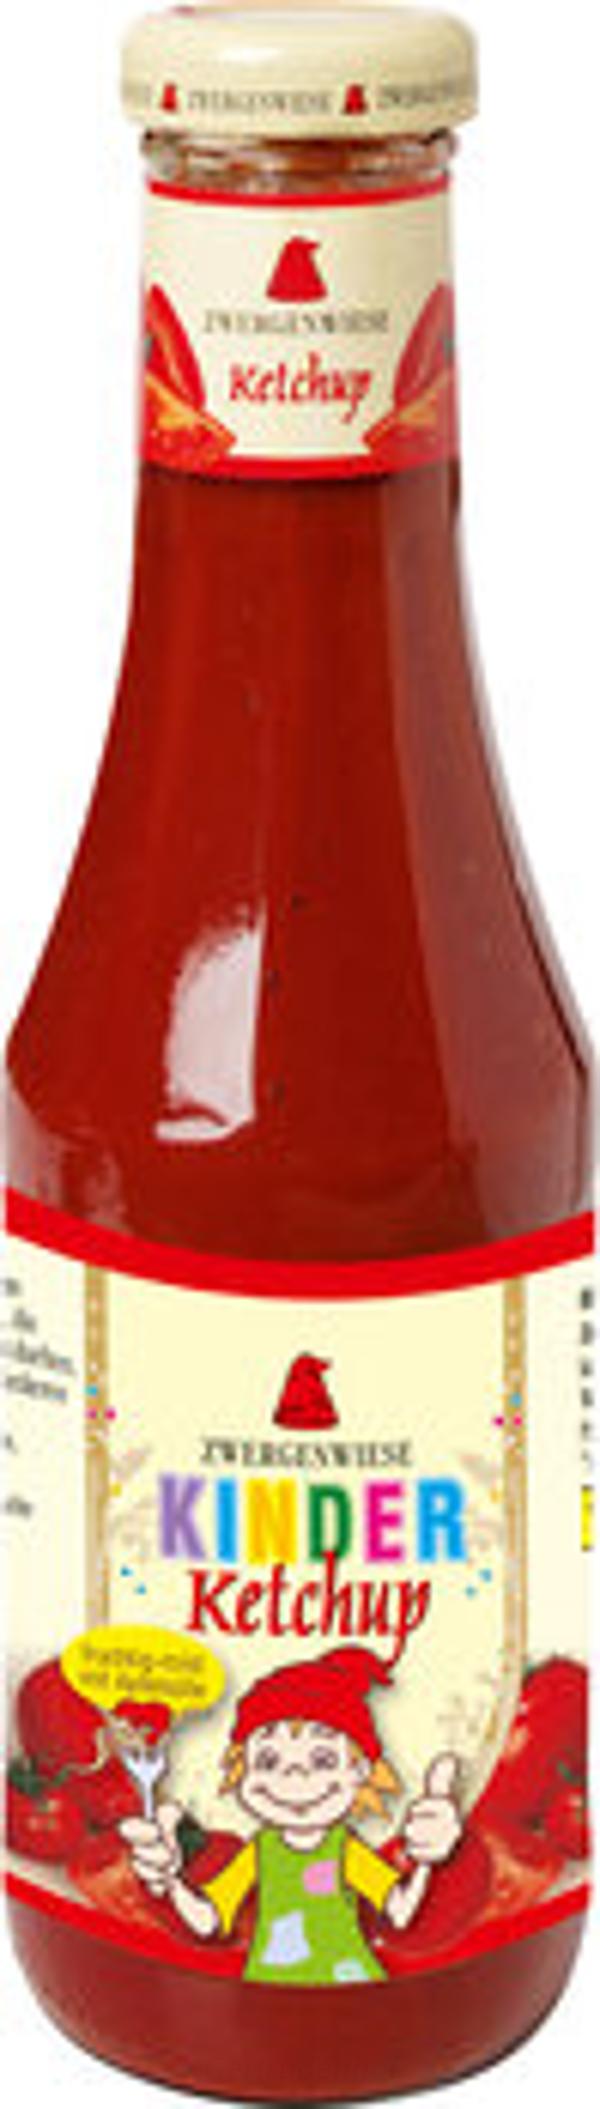 Produktfoto zu Kinder Ketchup Apfelsüße ZWE